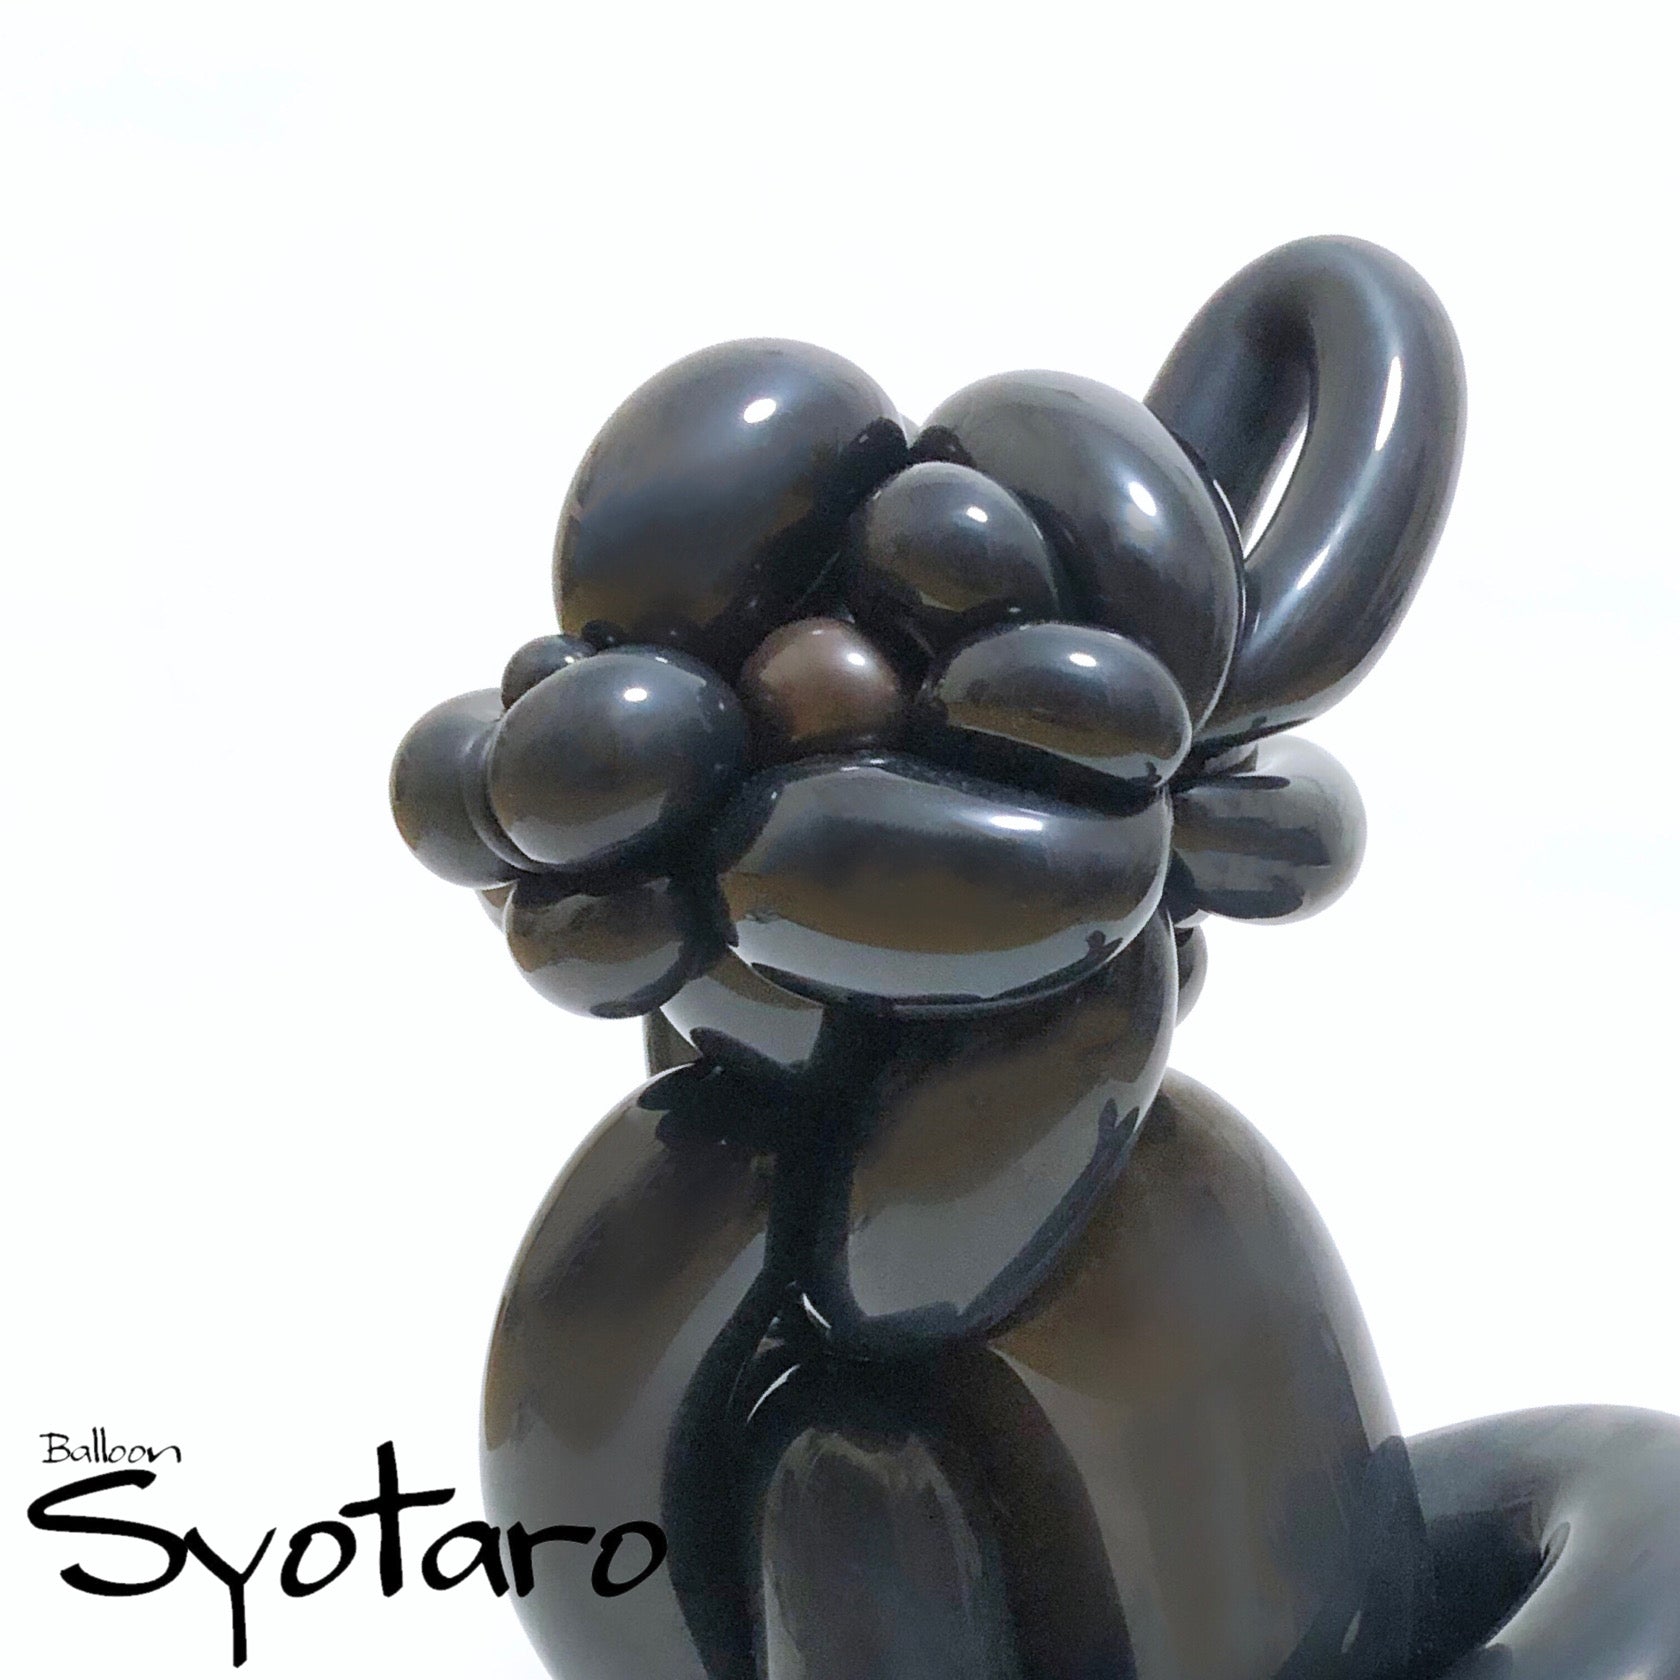 Balloon-Syotaroの黒猫の作り方【日本語版/Japanese ver.】